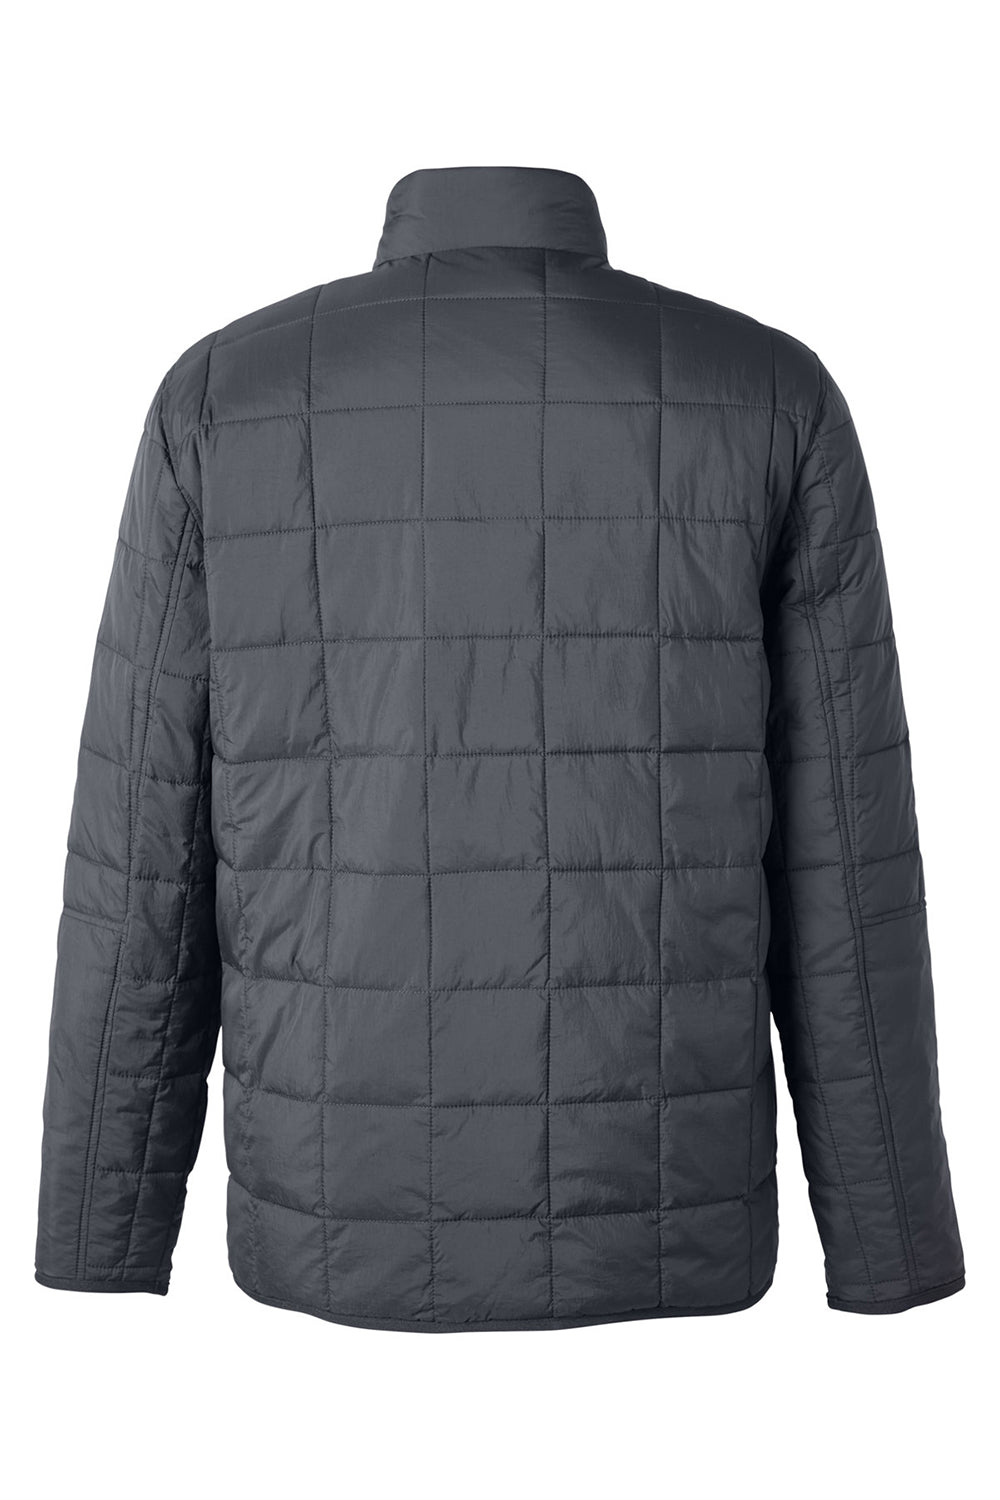 North End NE721 Mens Aura Fleece Lined Full Zip Jacket Carbon Grey Flat Back